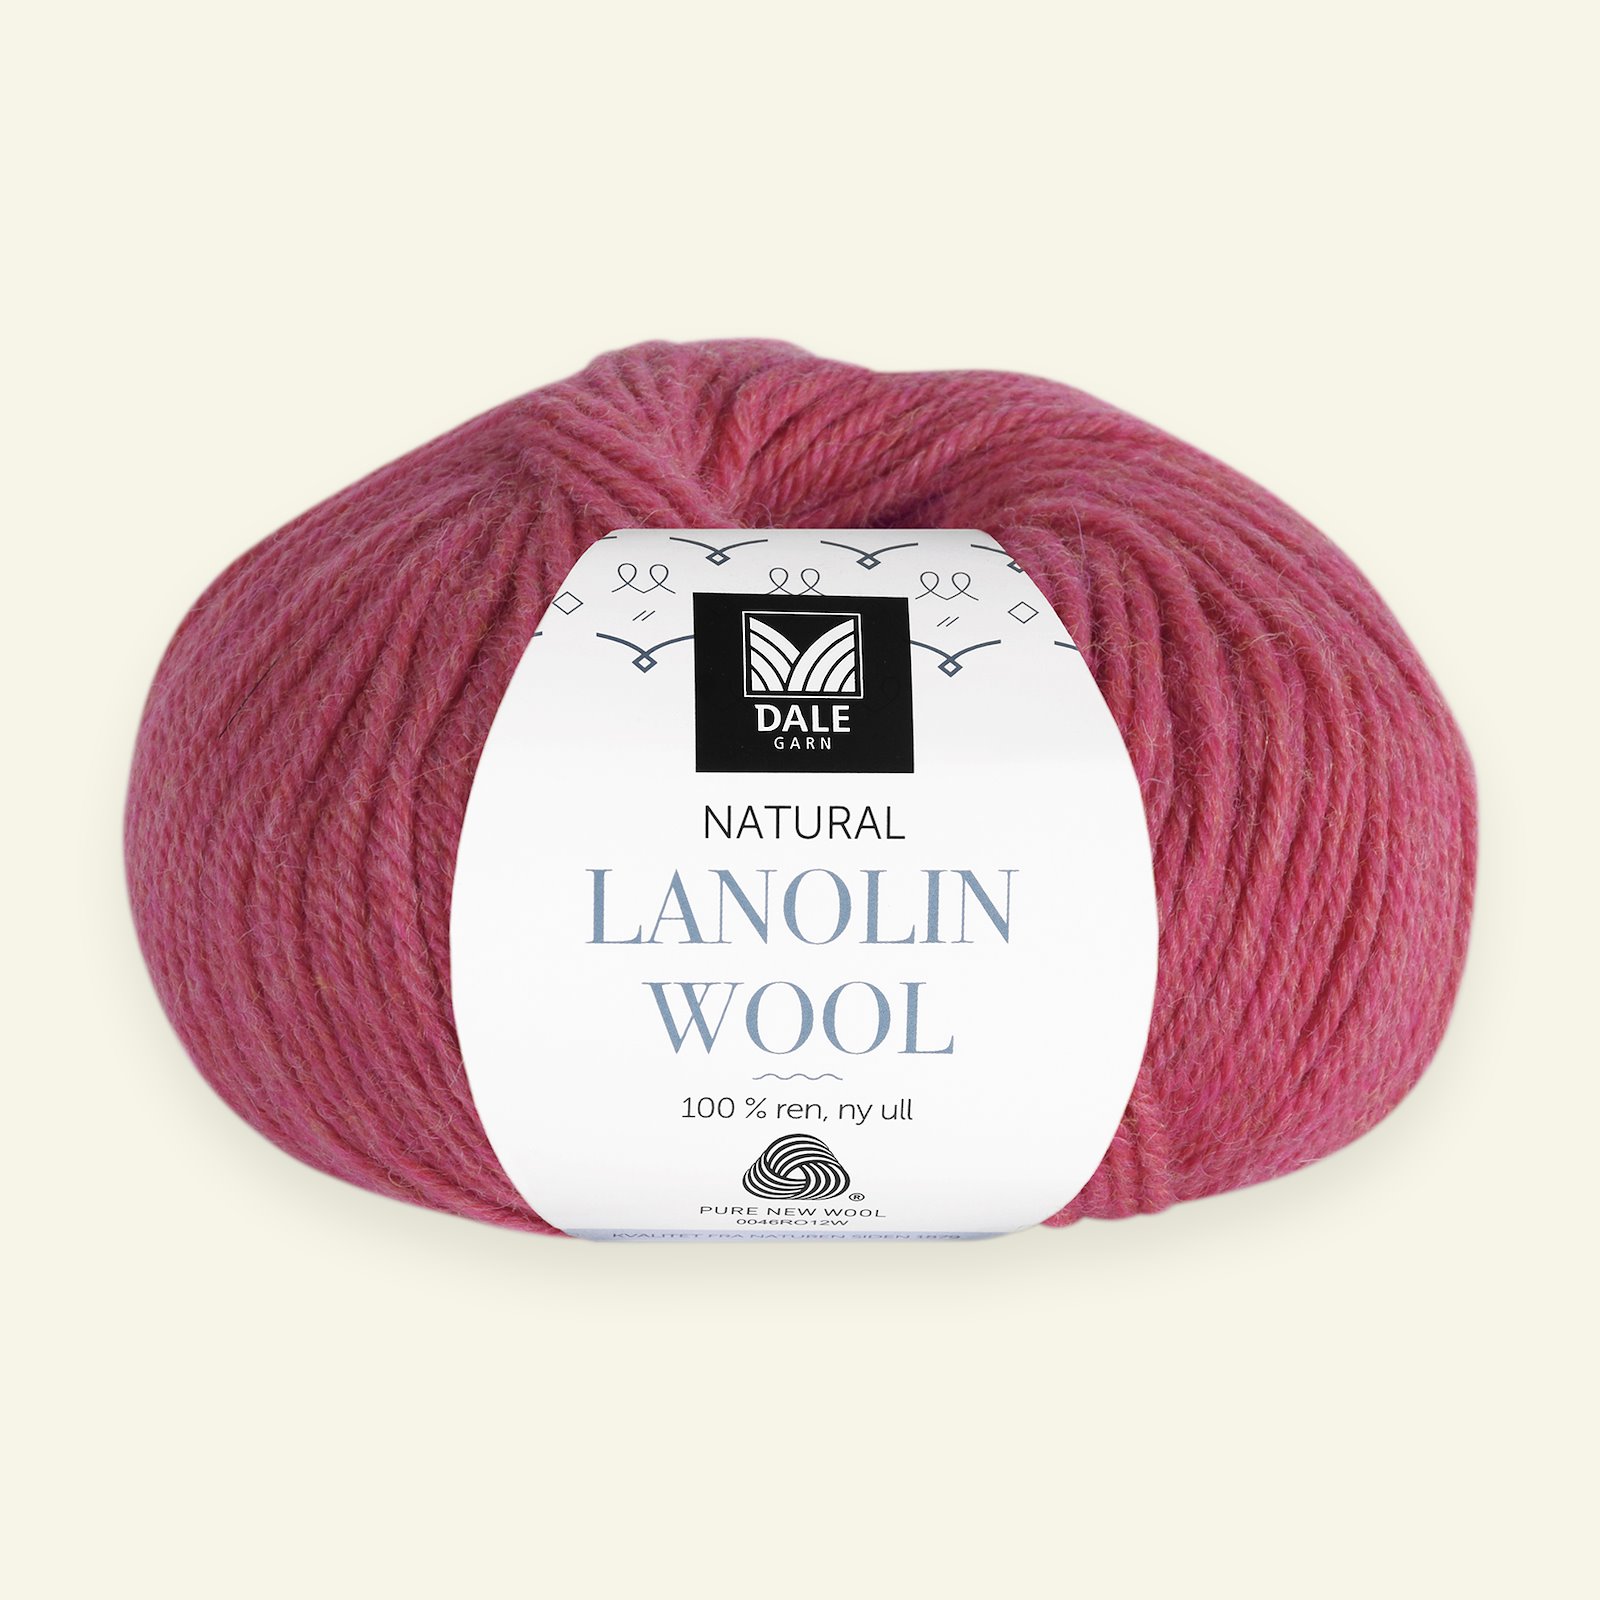 Dale Garn, 100% uldgarn "Lanolin Wool", hindbær rød (1447) 90000296_pack